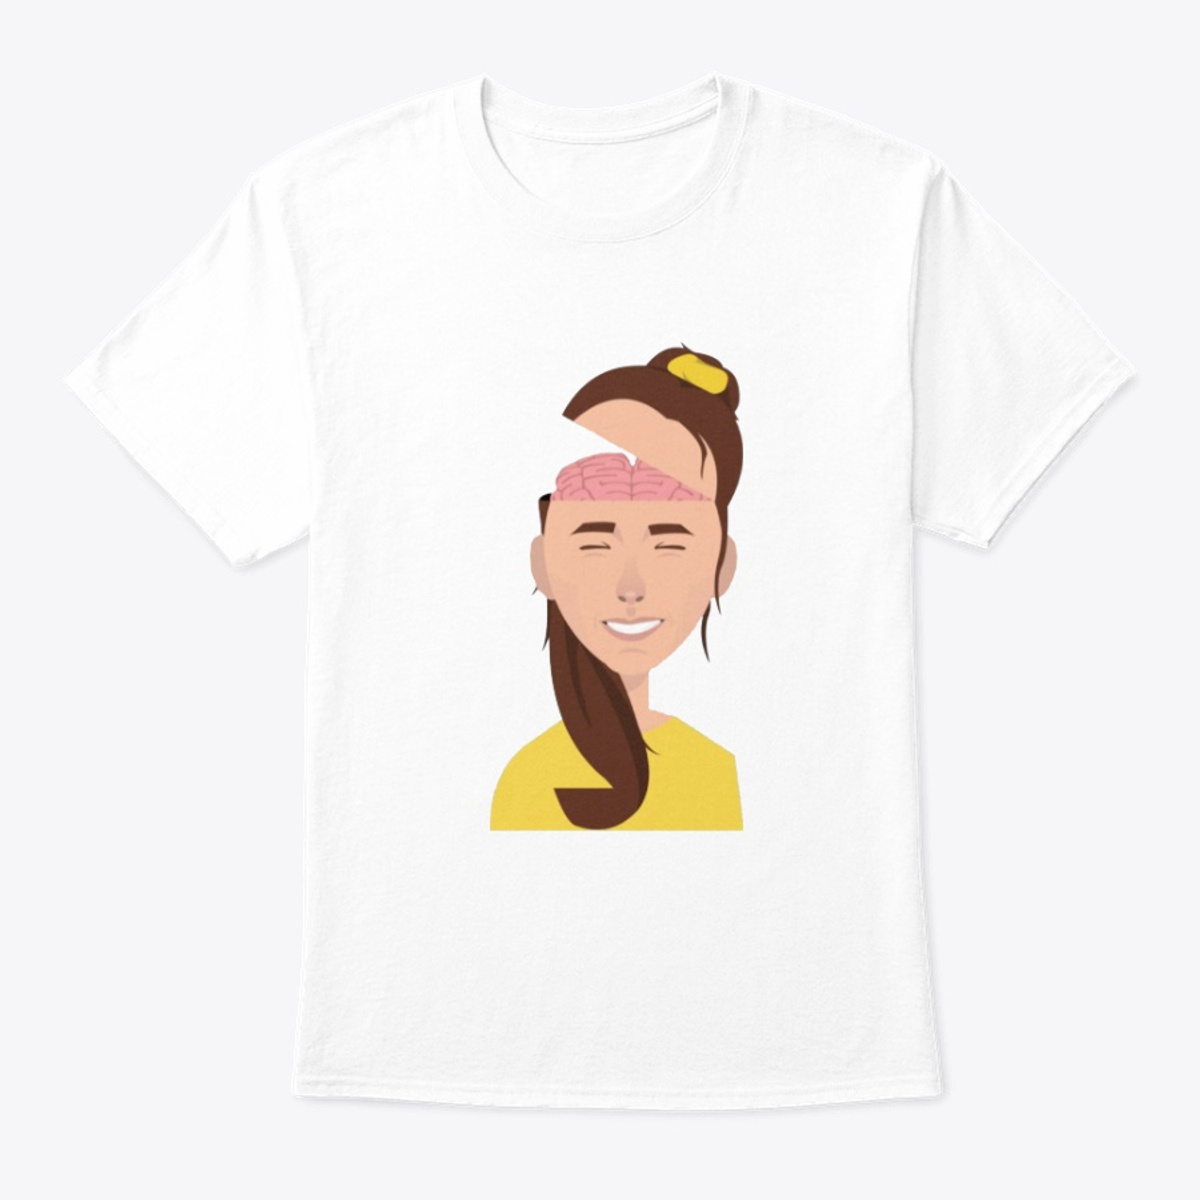 Emma Chamberlain - Horse Girl Essential T-Shirt for Sale by KatFair